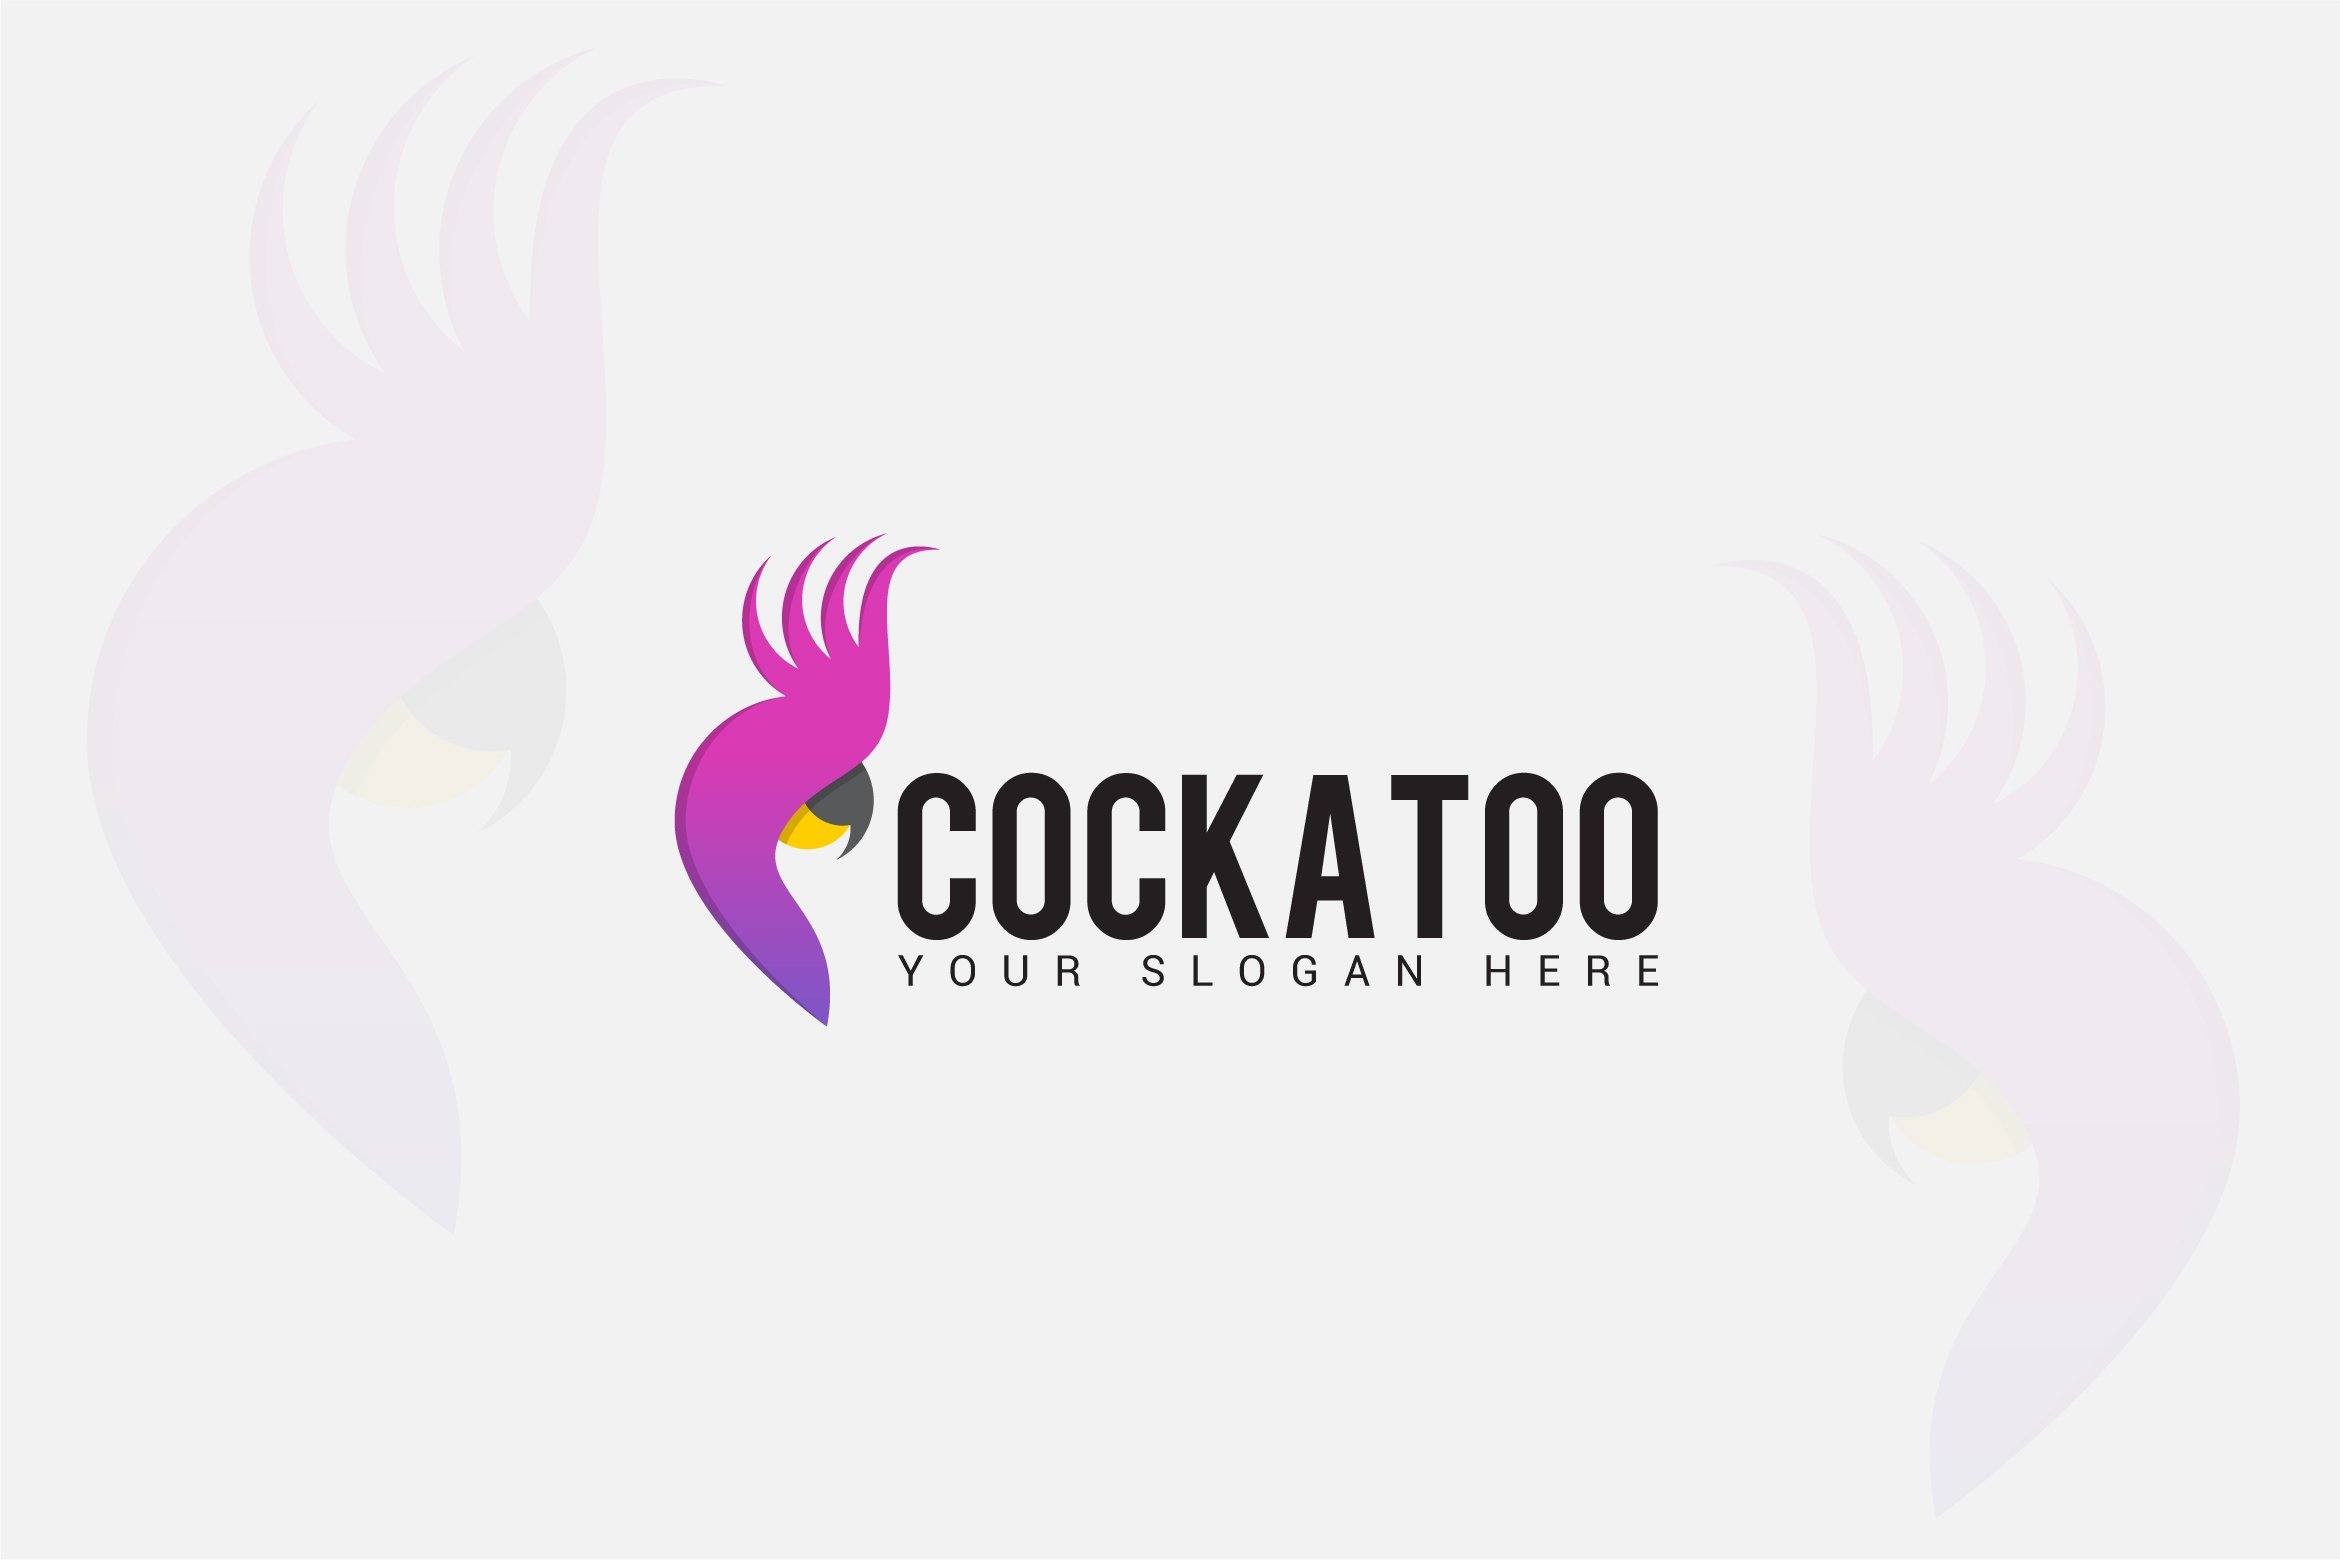 Cockatoo cover image.